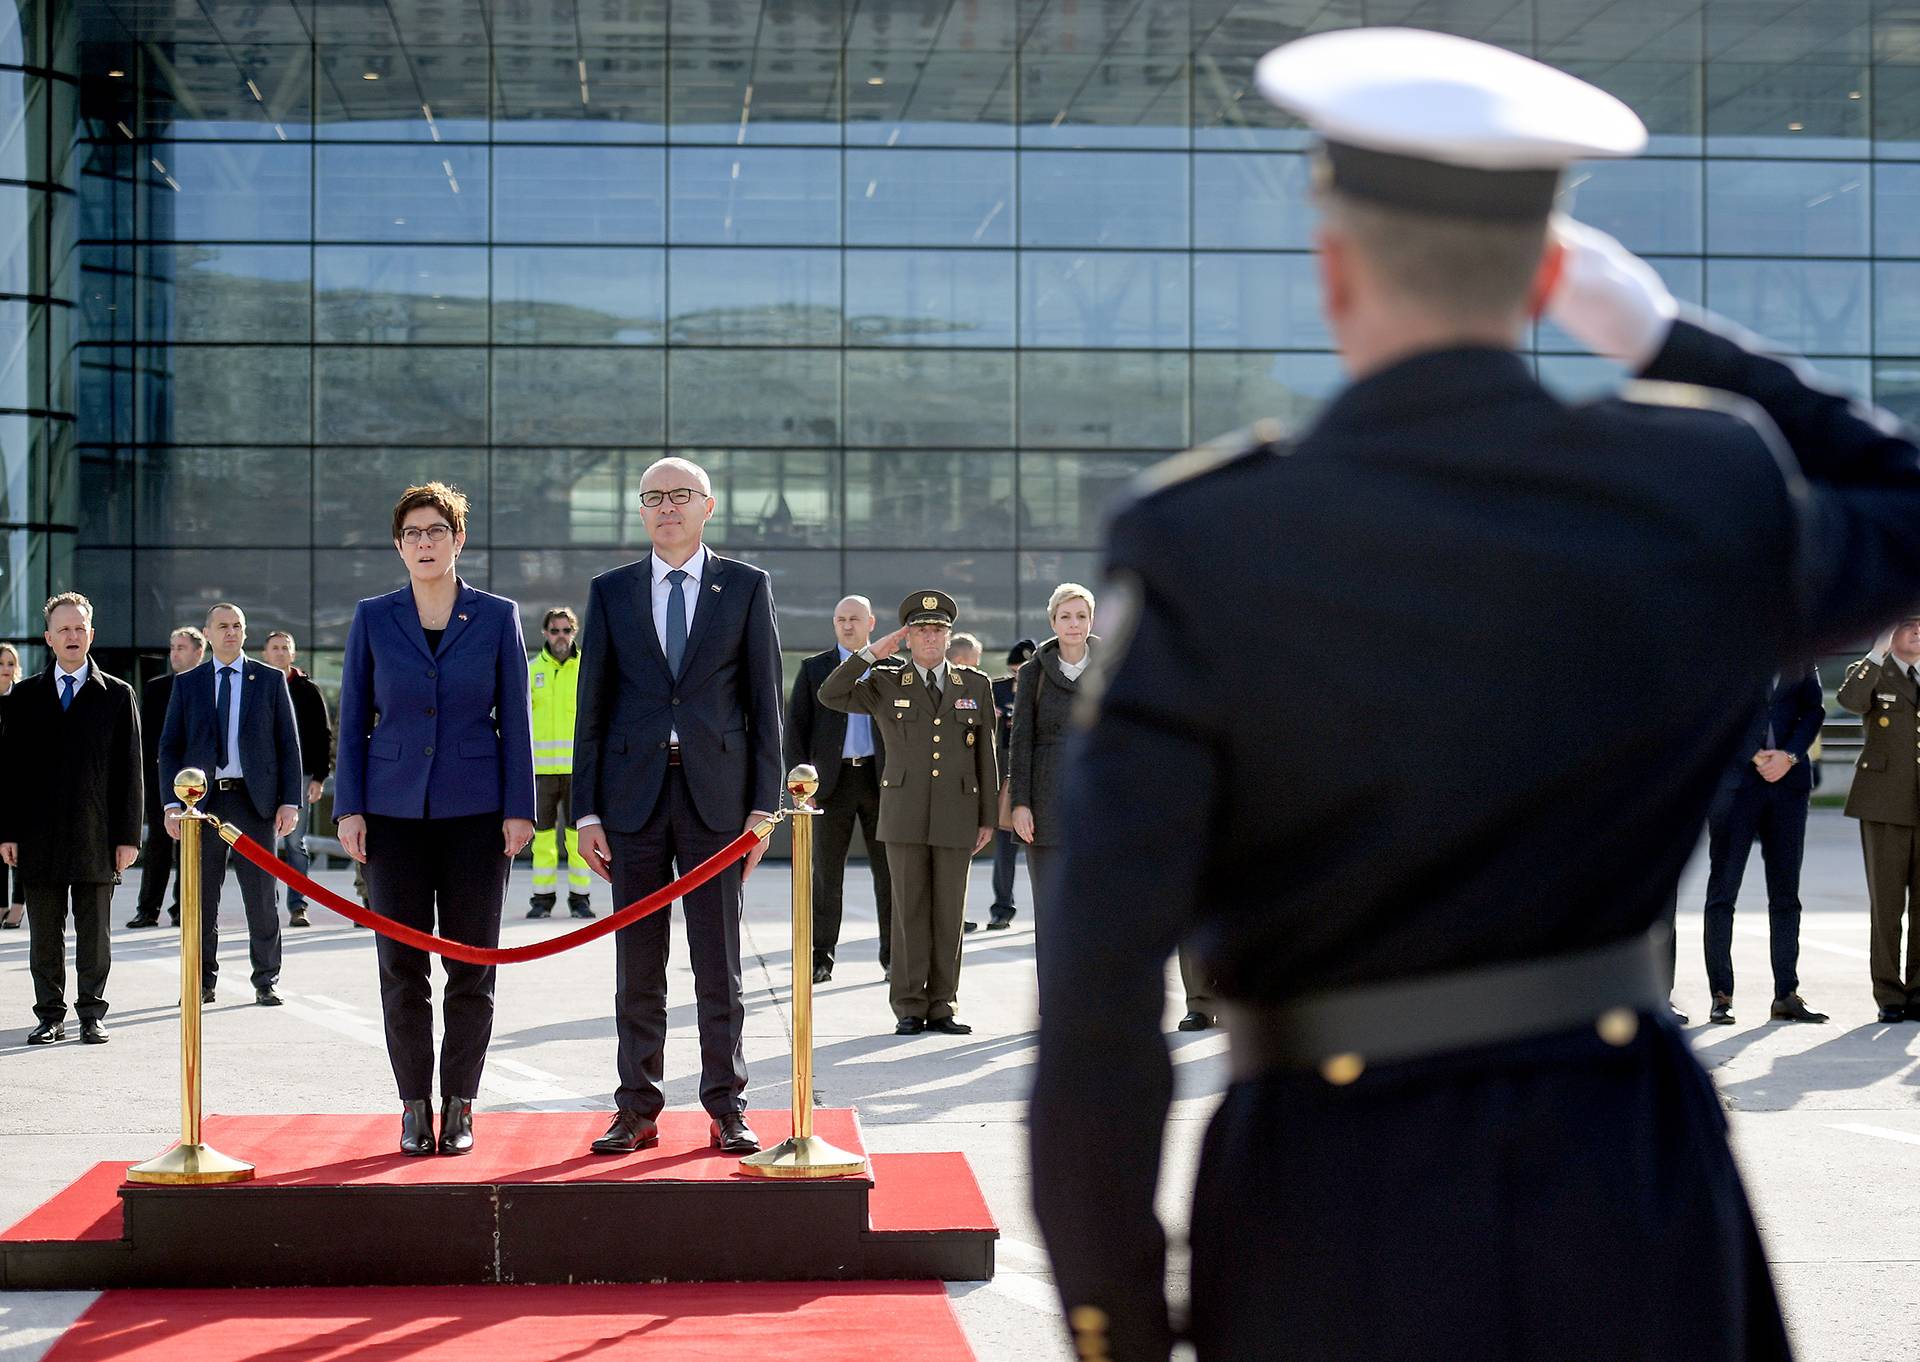 Minister of Defence Kramp-Karrenbauer travels to Croatia